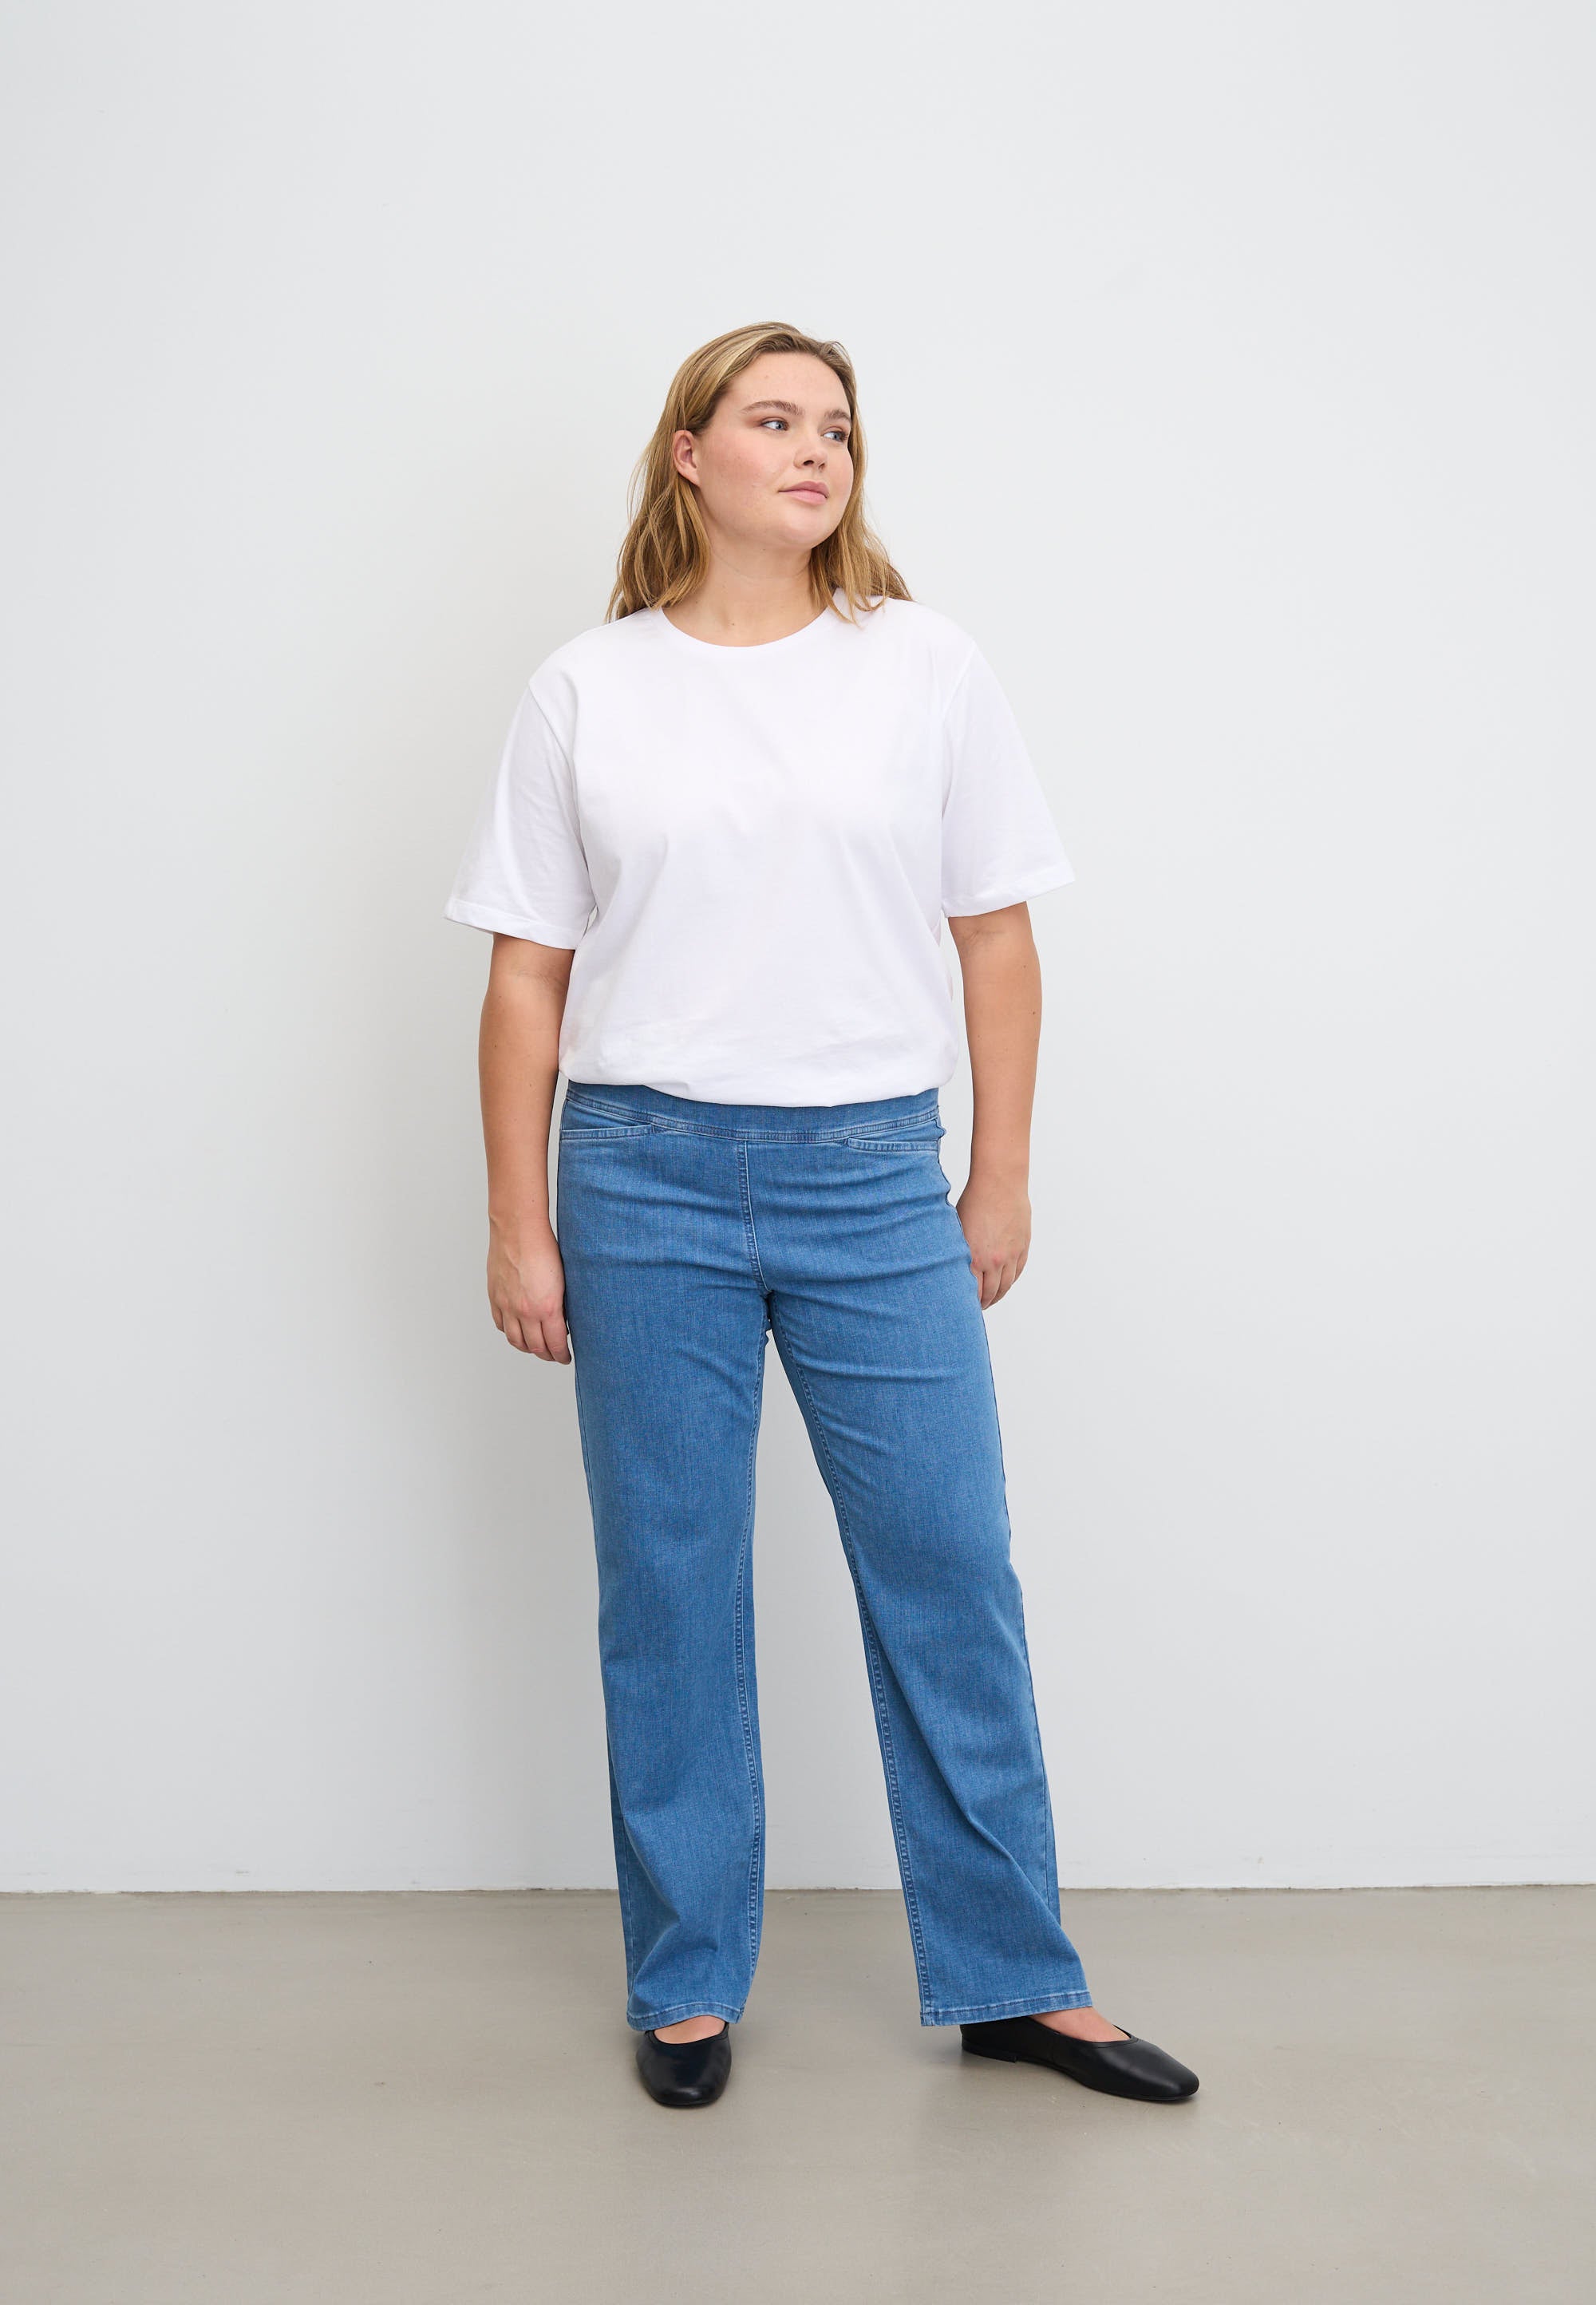 LAURIE Thea Straight - Medium Length Trousers STRAIGHT 49350 Light Blue Denim